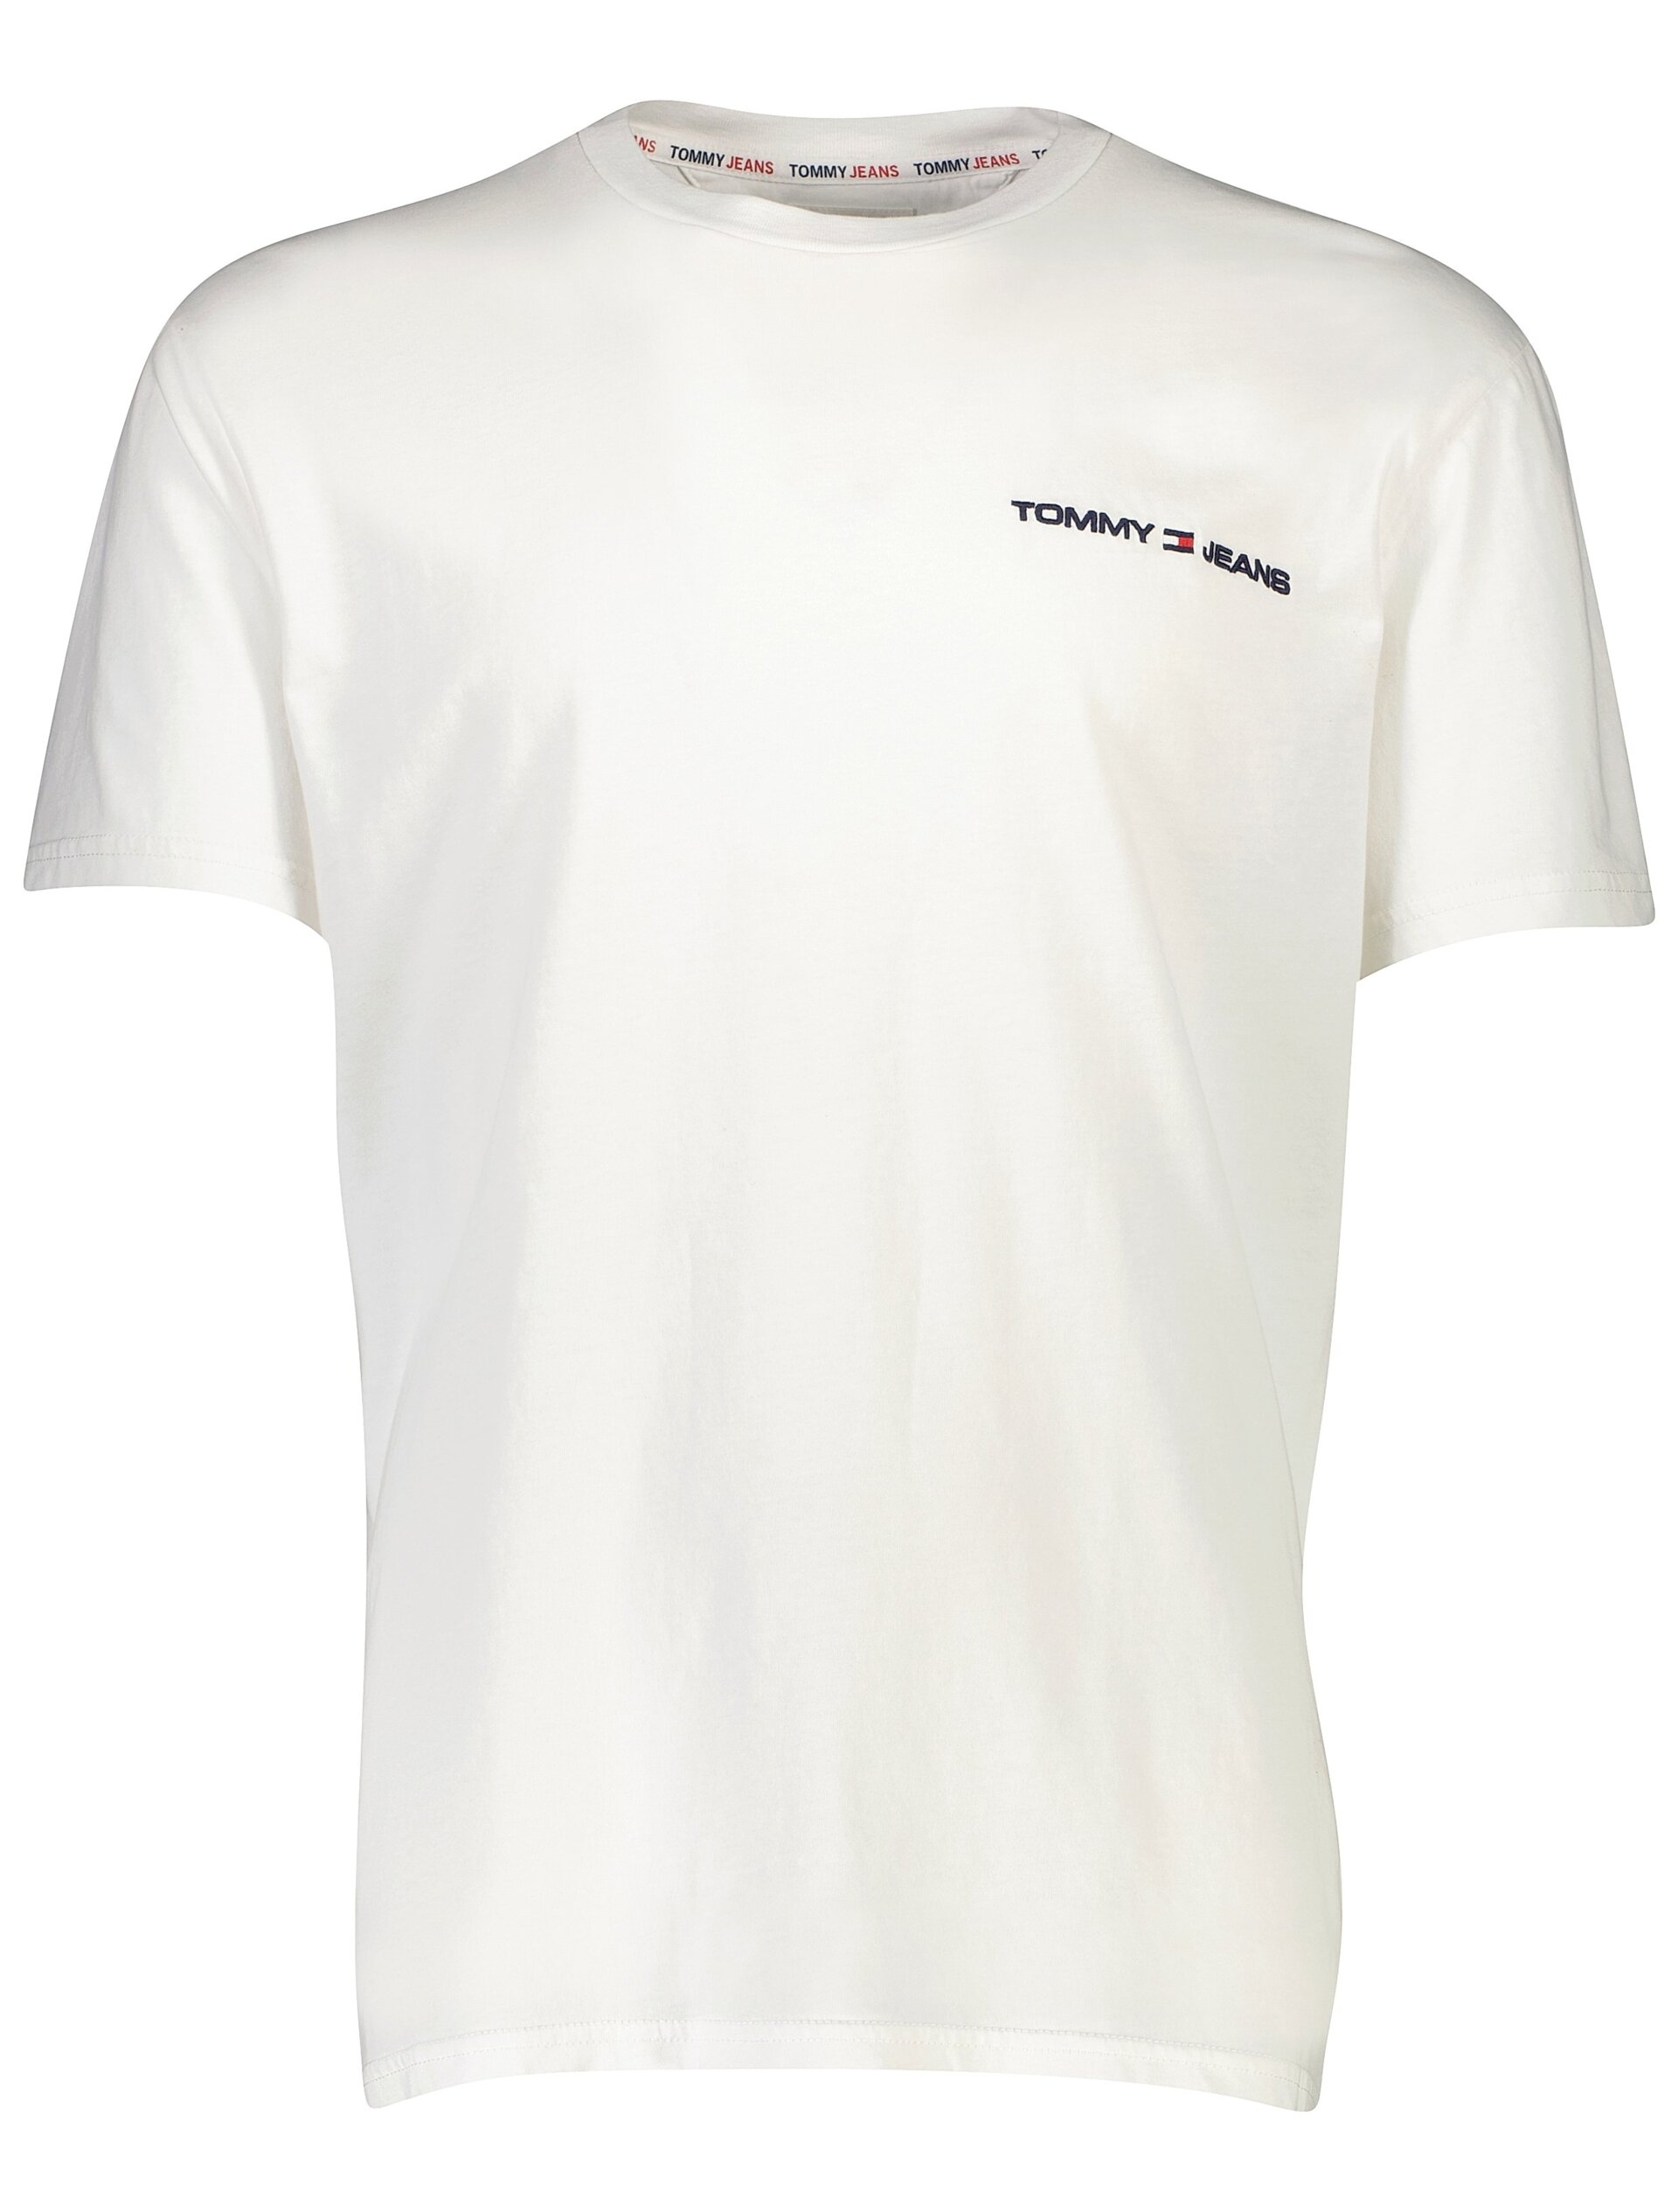 Tommy Jeans T-shirt hvid / ybr white